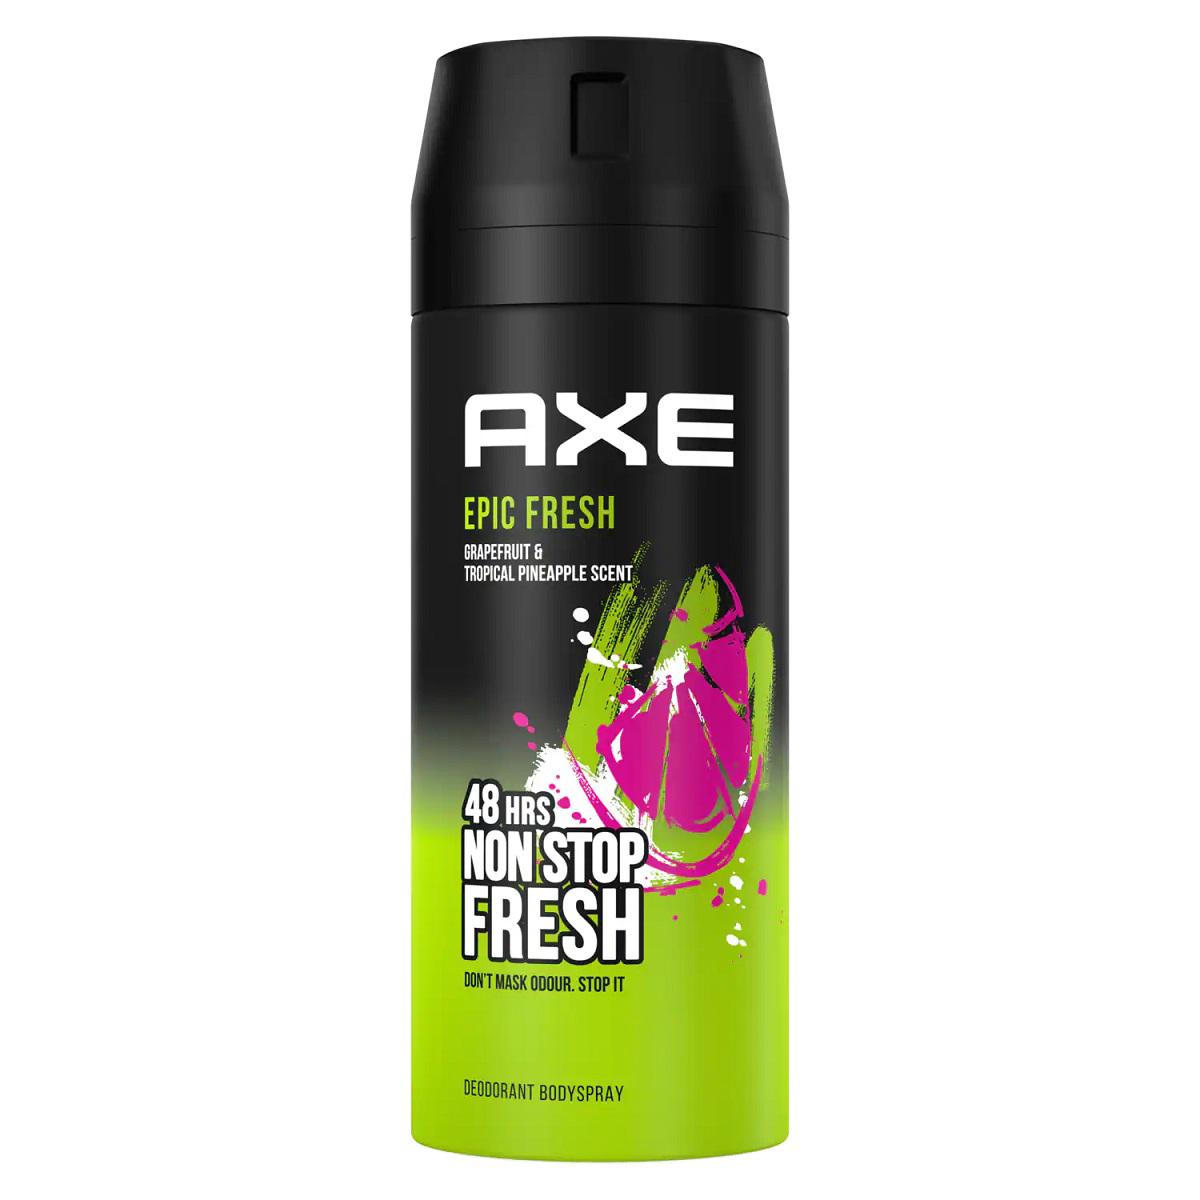 AXE Deodorant / Body Spray - Epic Fresh